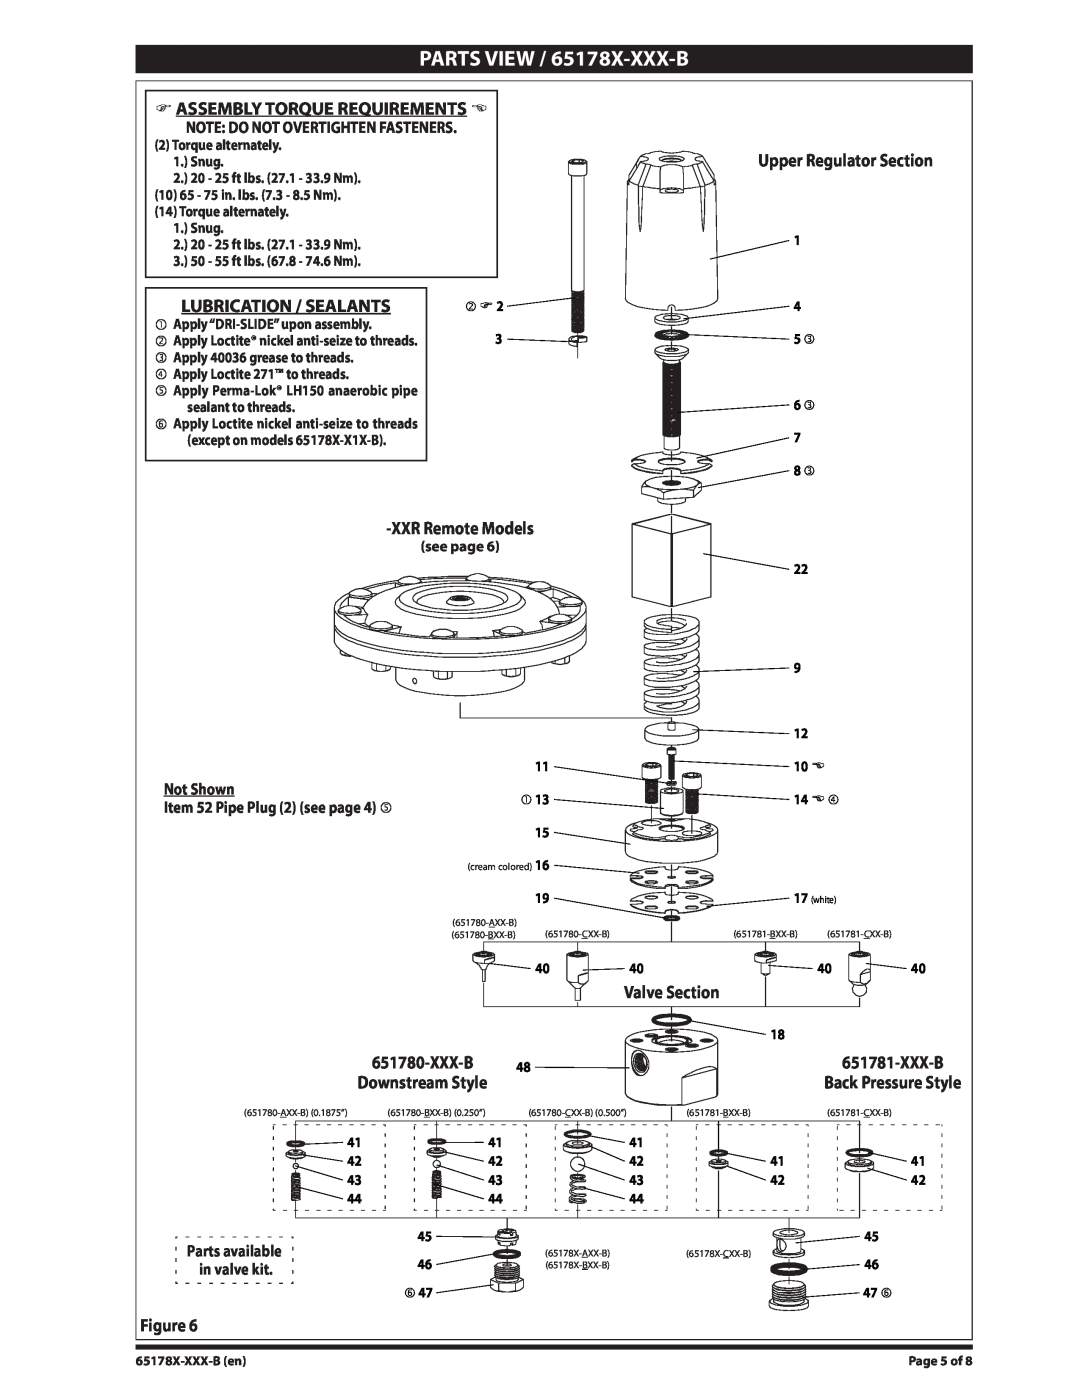 Ingersoll-Rand PARTS VIEW / 65178X-XXX-B, Assembly Torque Requirements, Lubrication / Sealants, XXRRemote Models, Xxx-B 